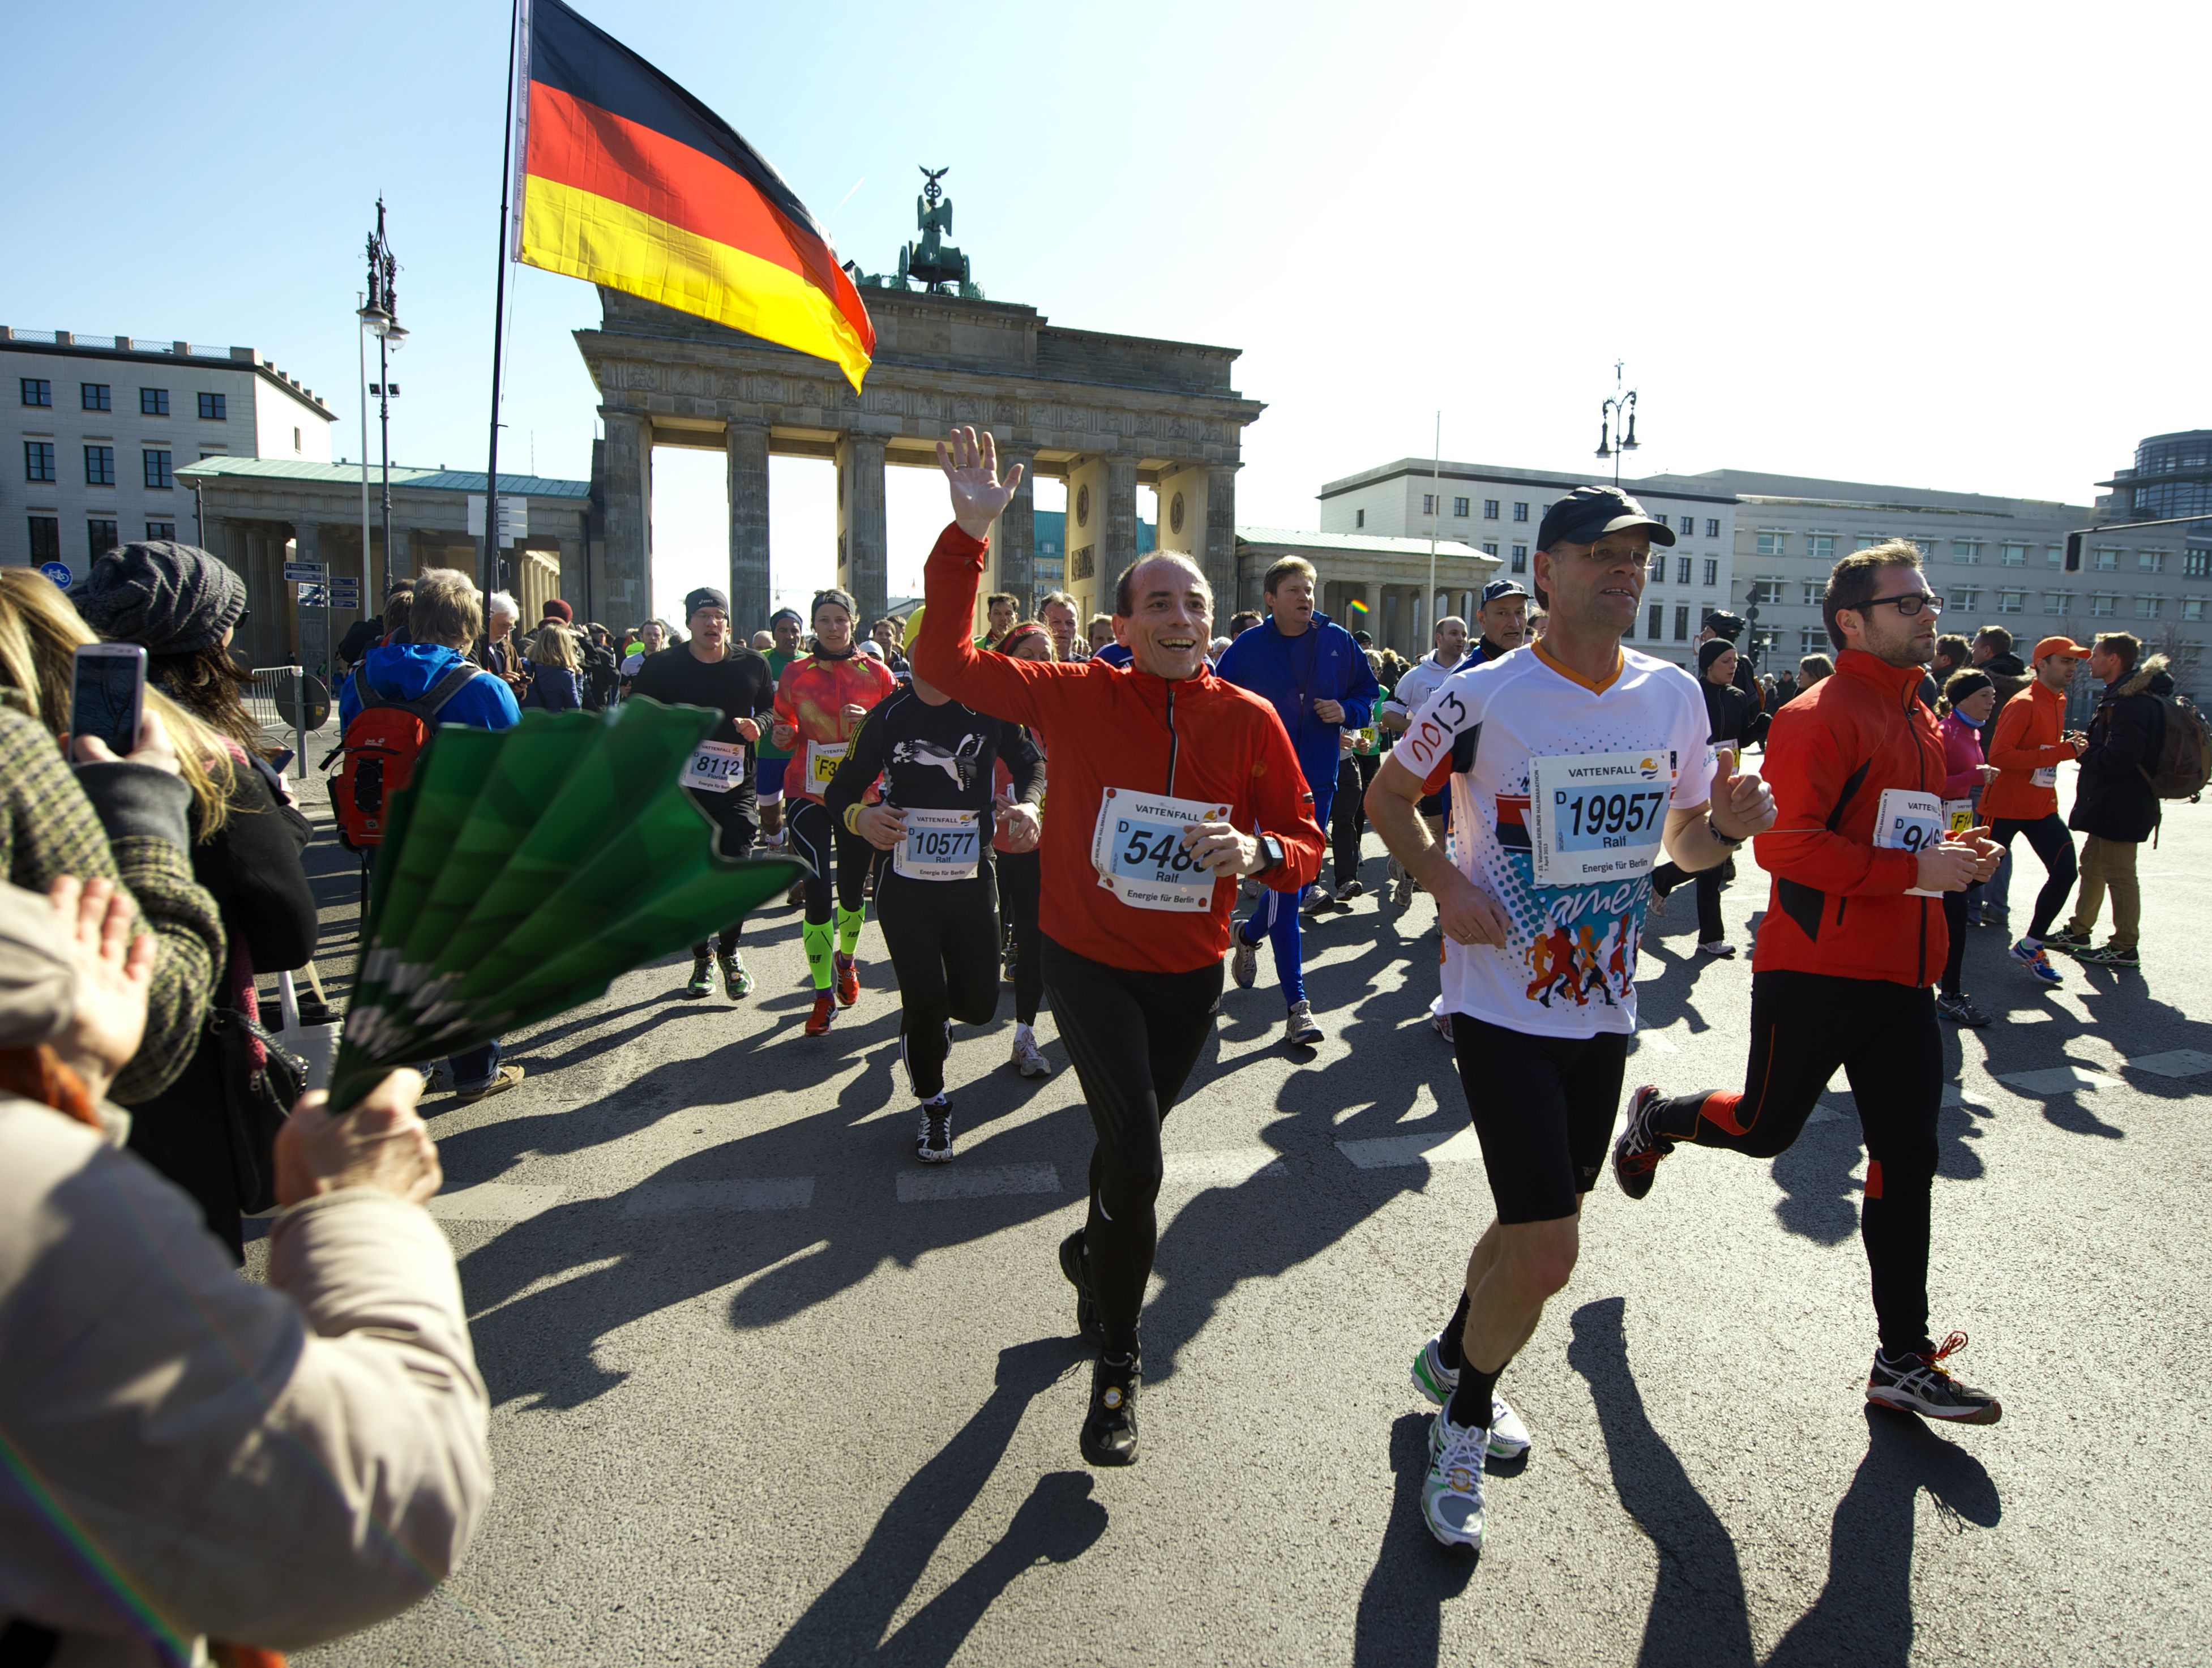 2014 Brandenburg Gate, 5 km into the race